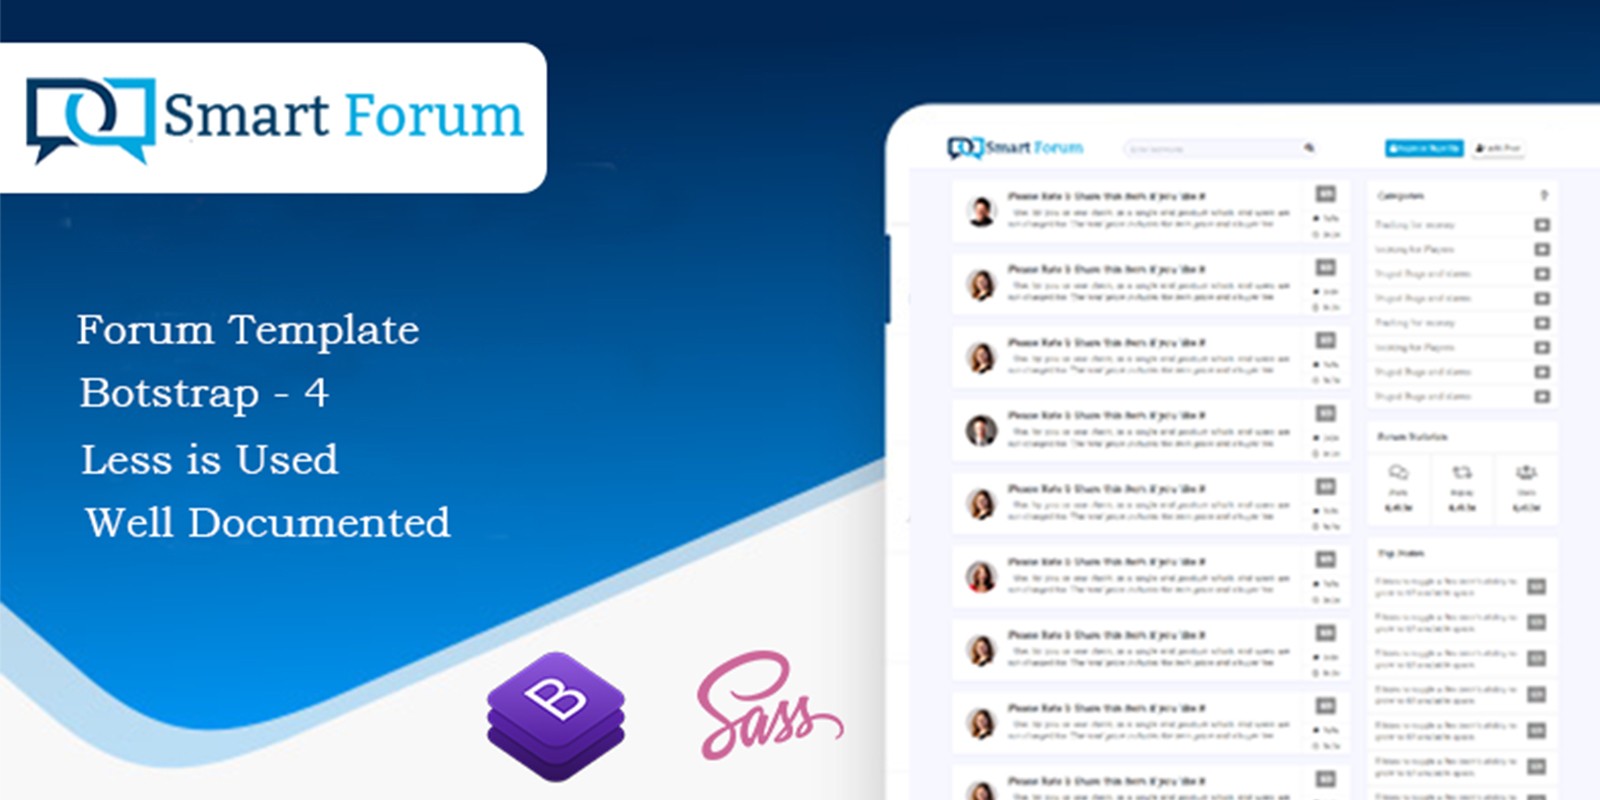 Sites forums. Forum шаблоны. Forum Template html. Smart forum. Шаблон телефонного справочника html.